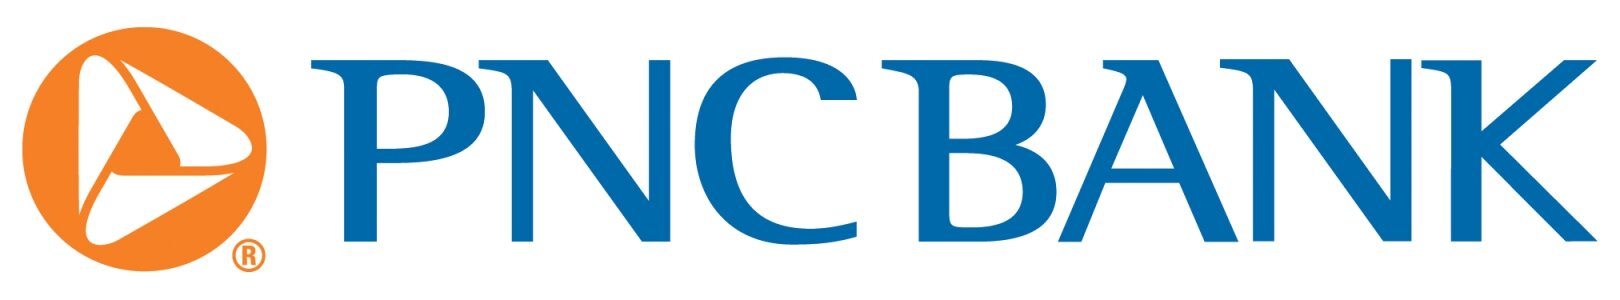 PNC-logo.jpg